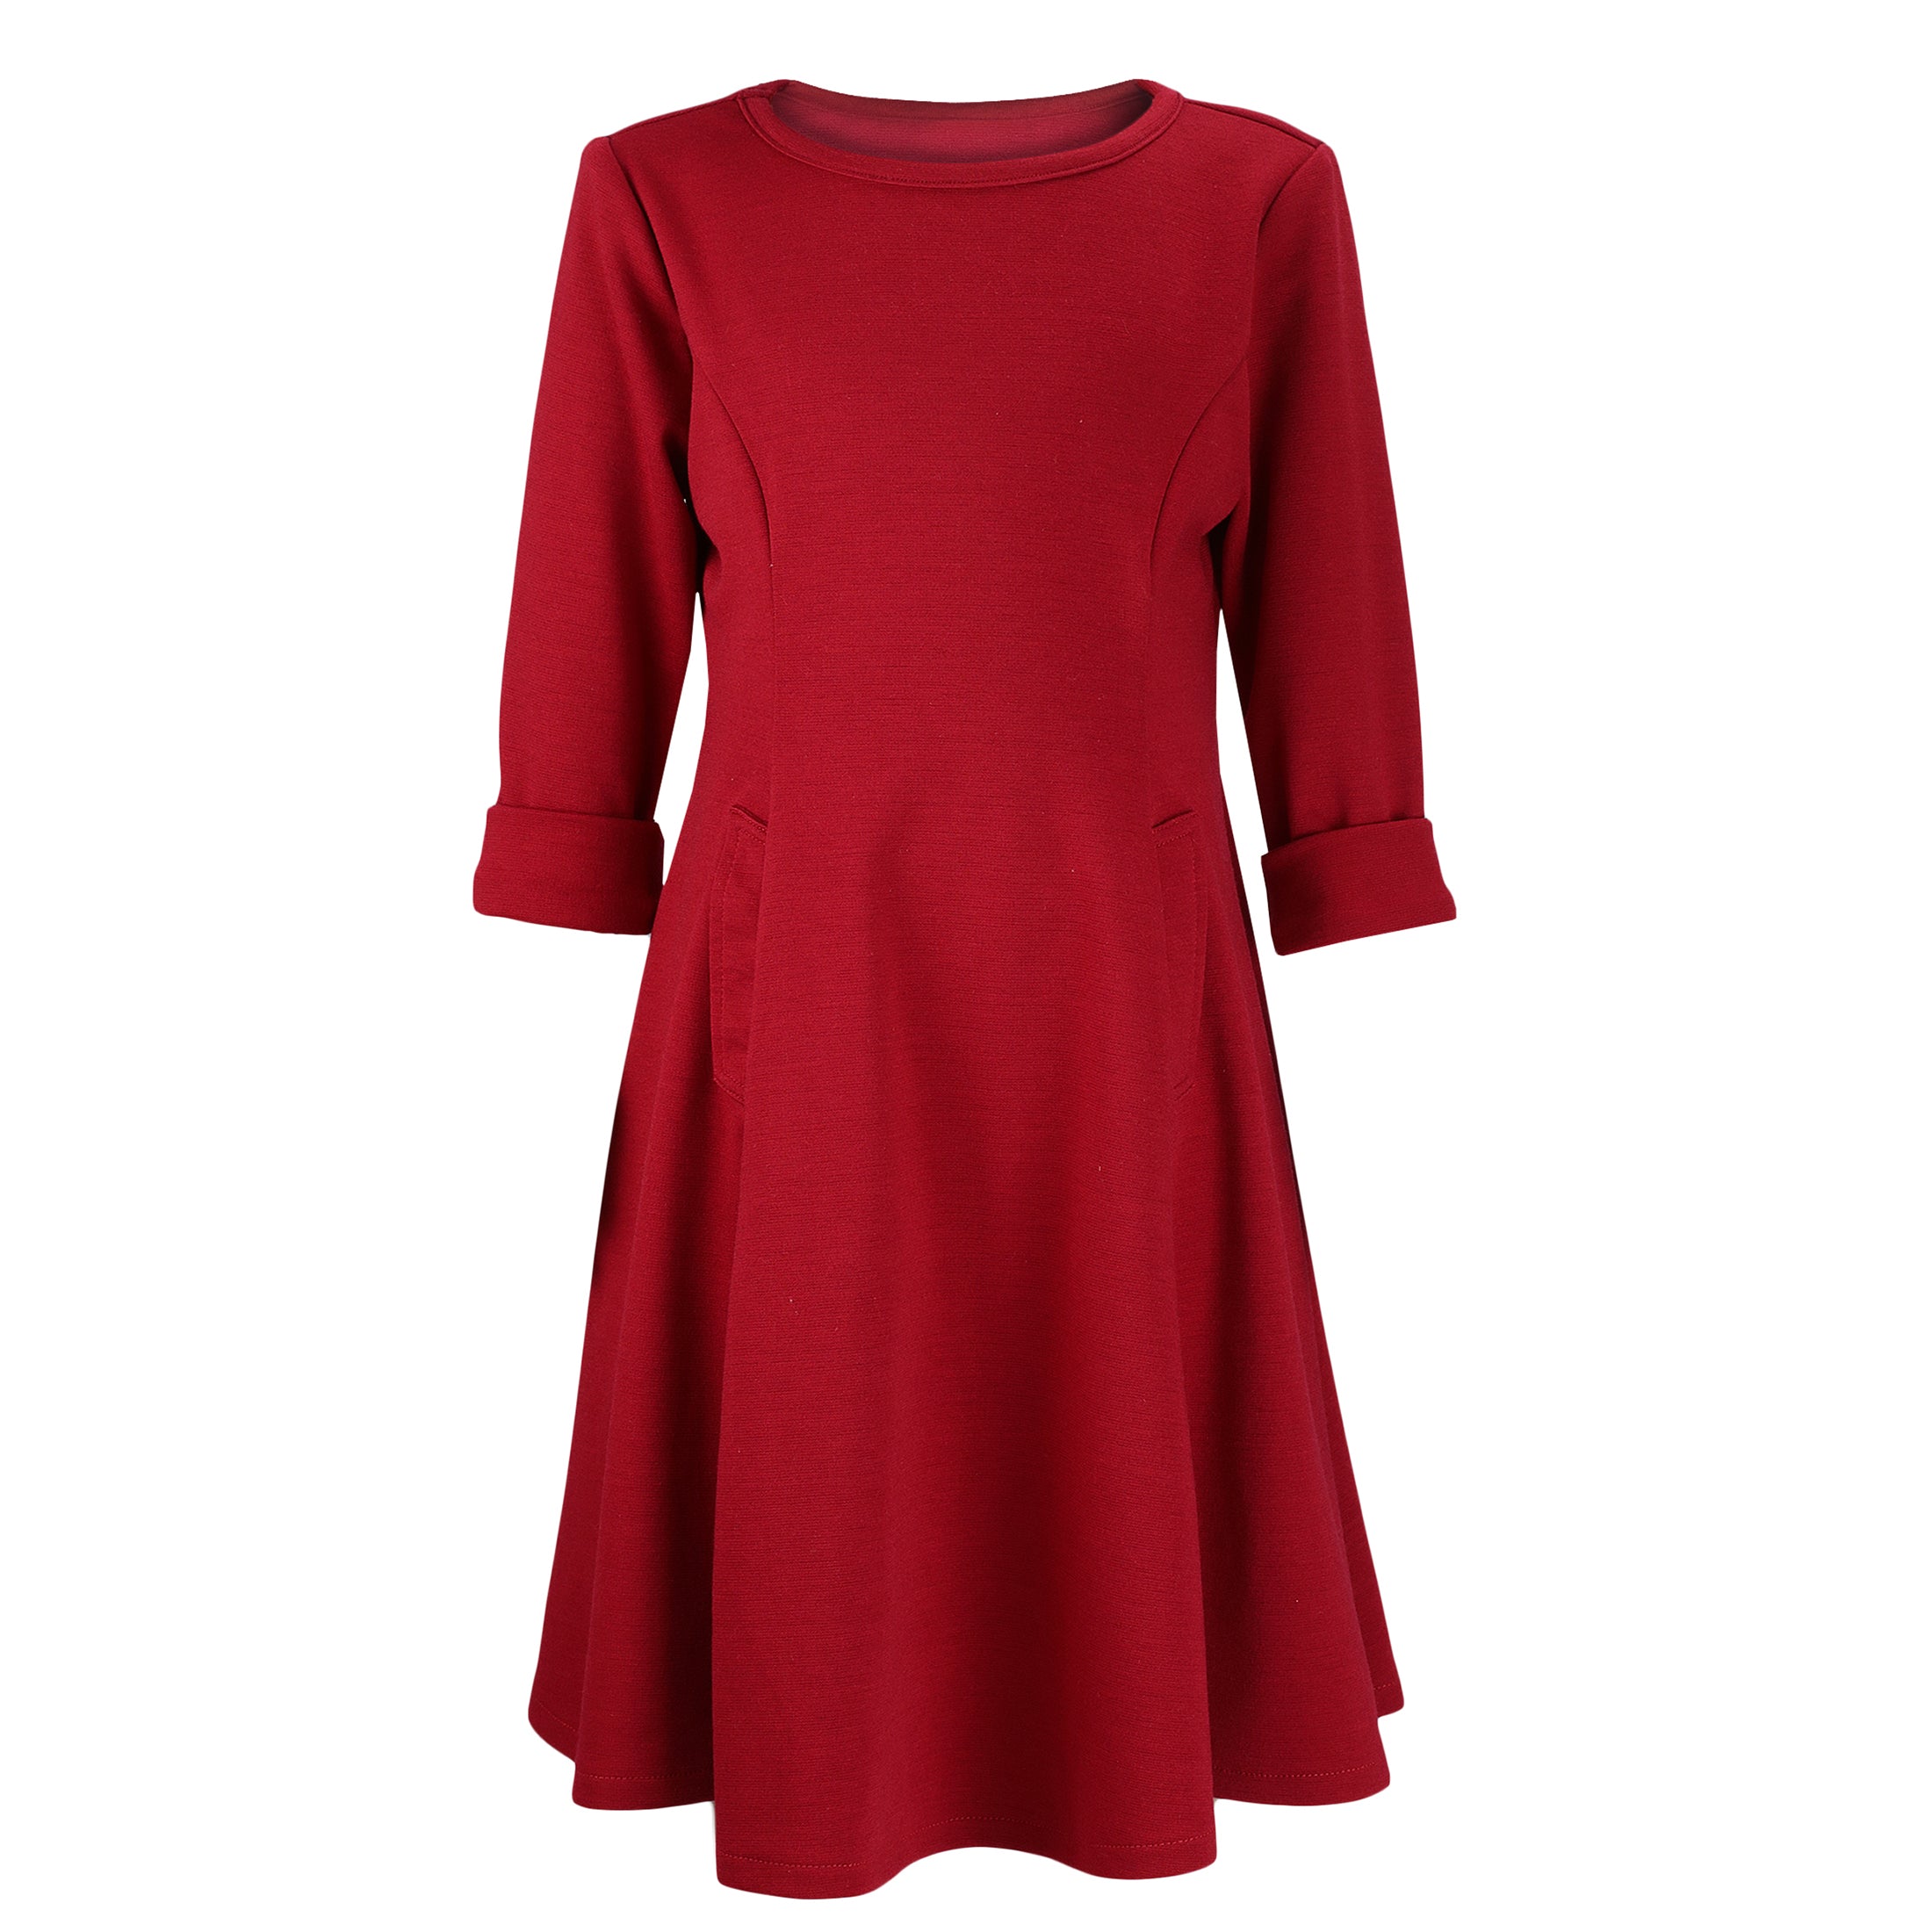 Rachel Red Pocket Dress